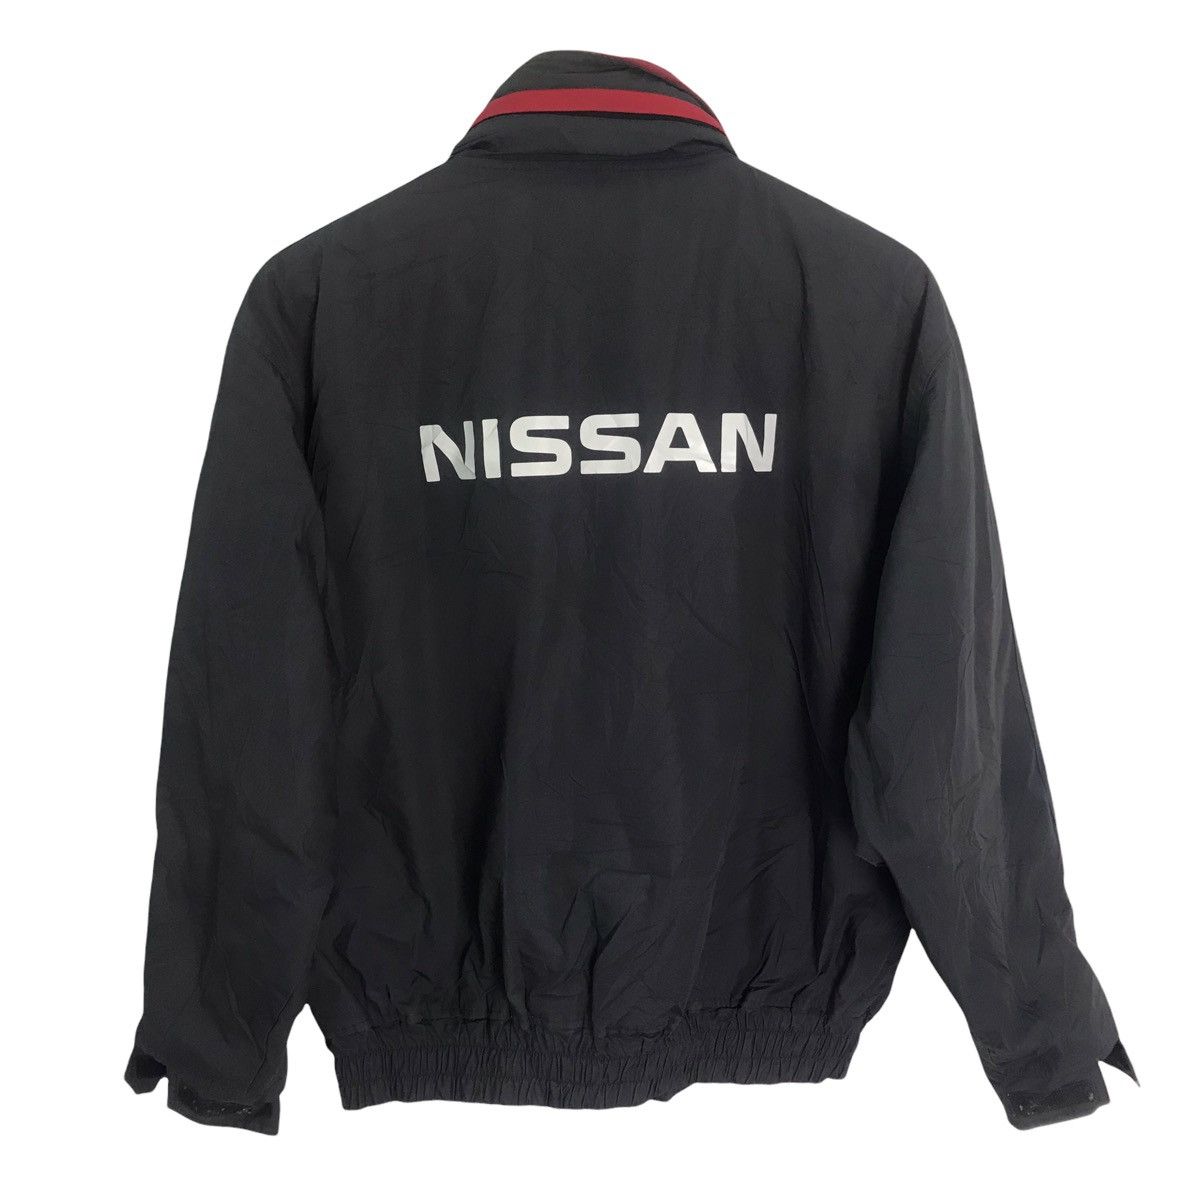 Sports Specialties - Vintage nissan Motorsport bomber jacket japan - 1